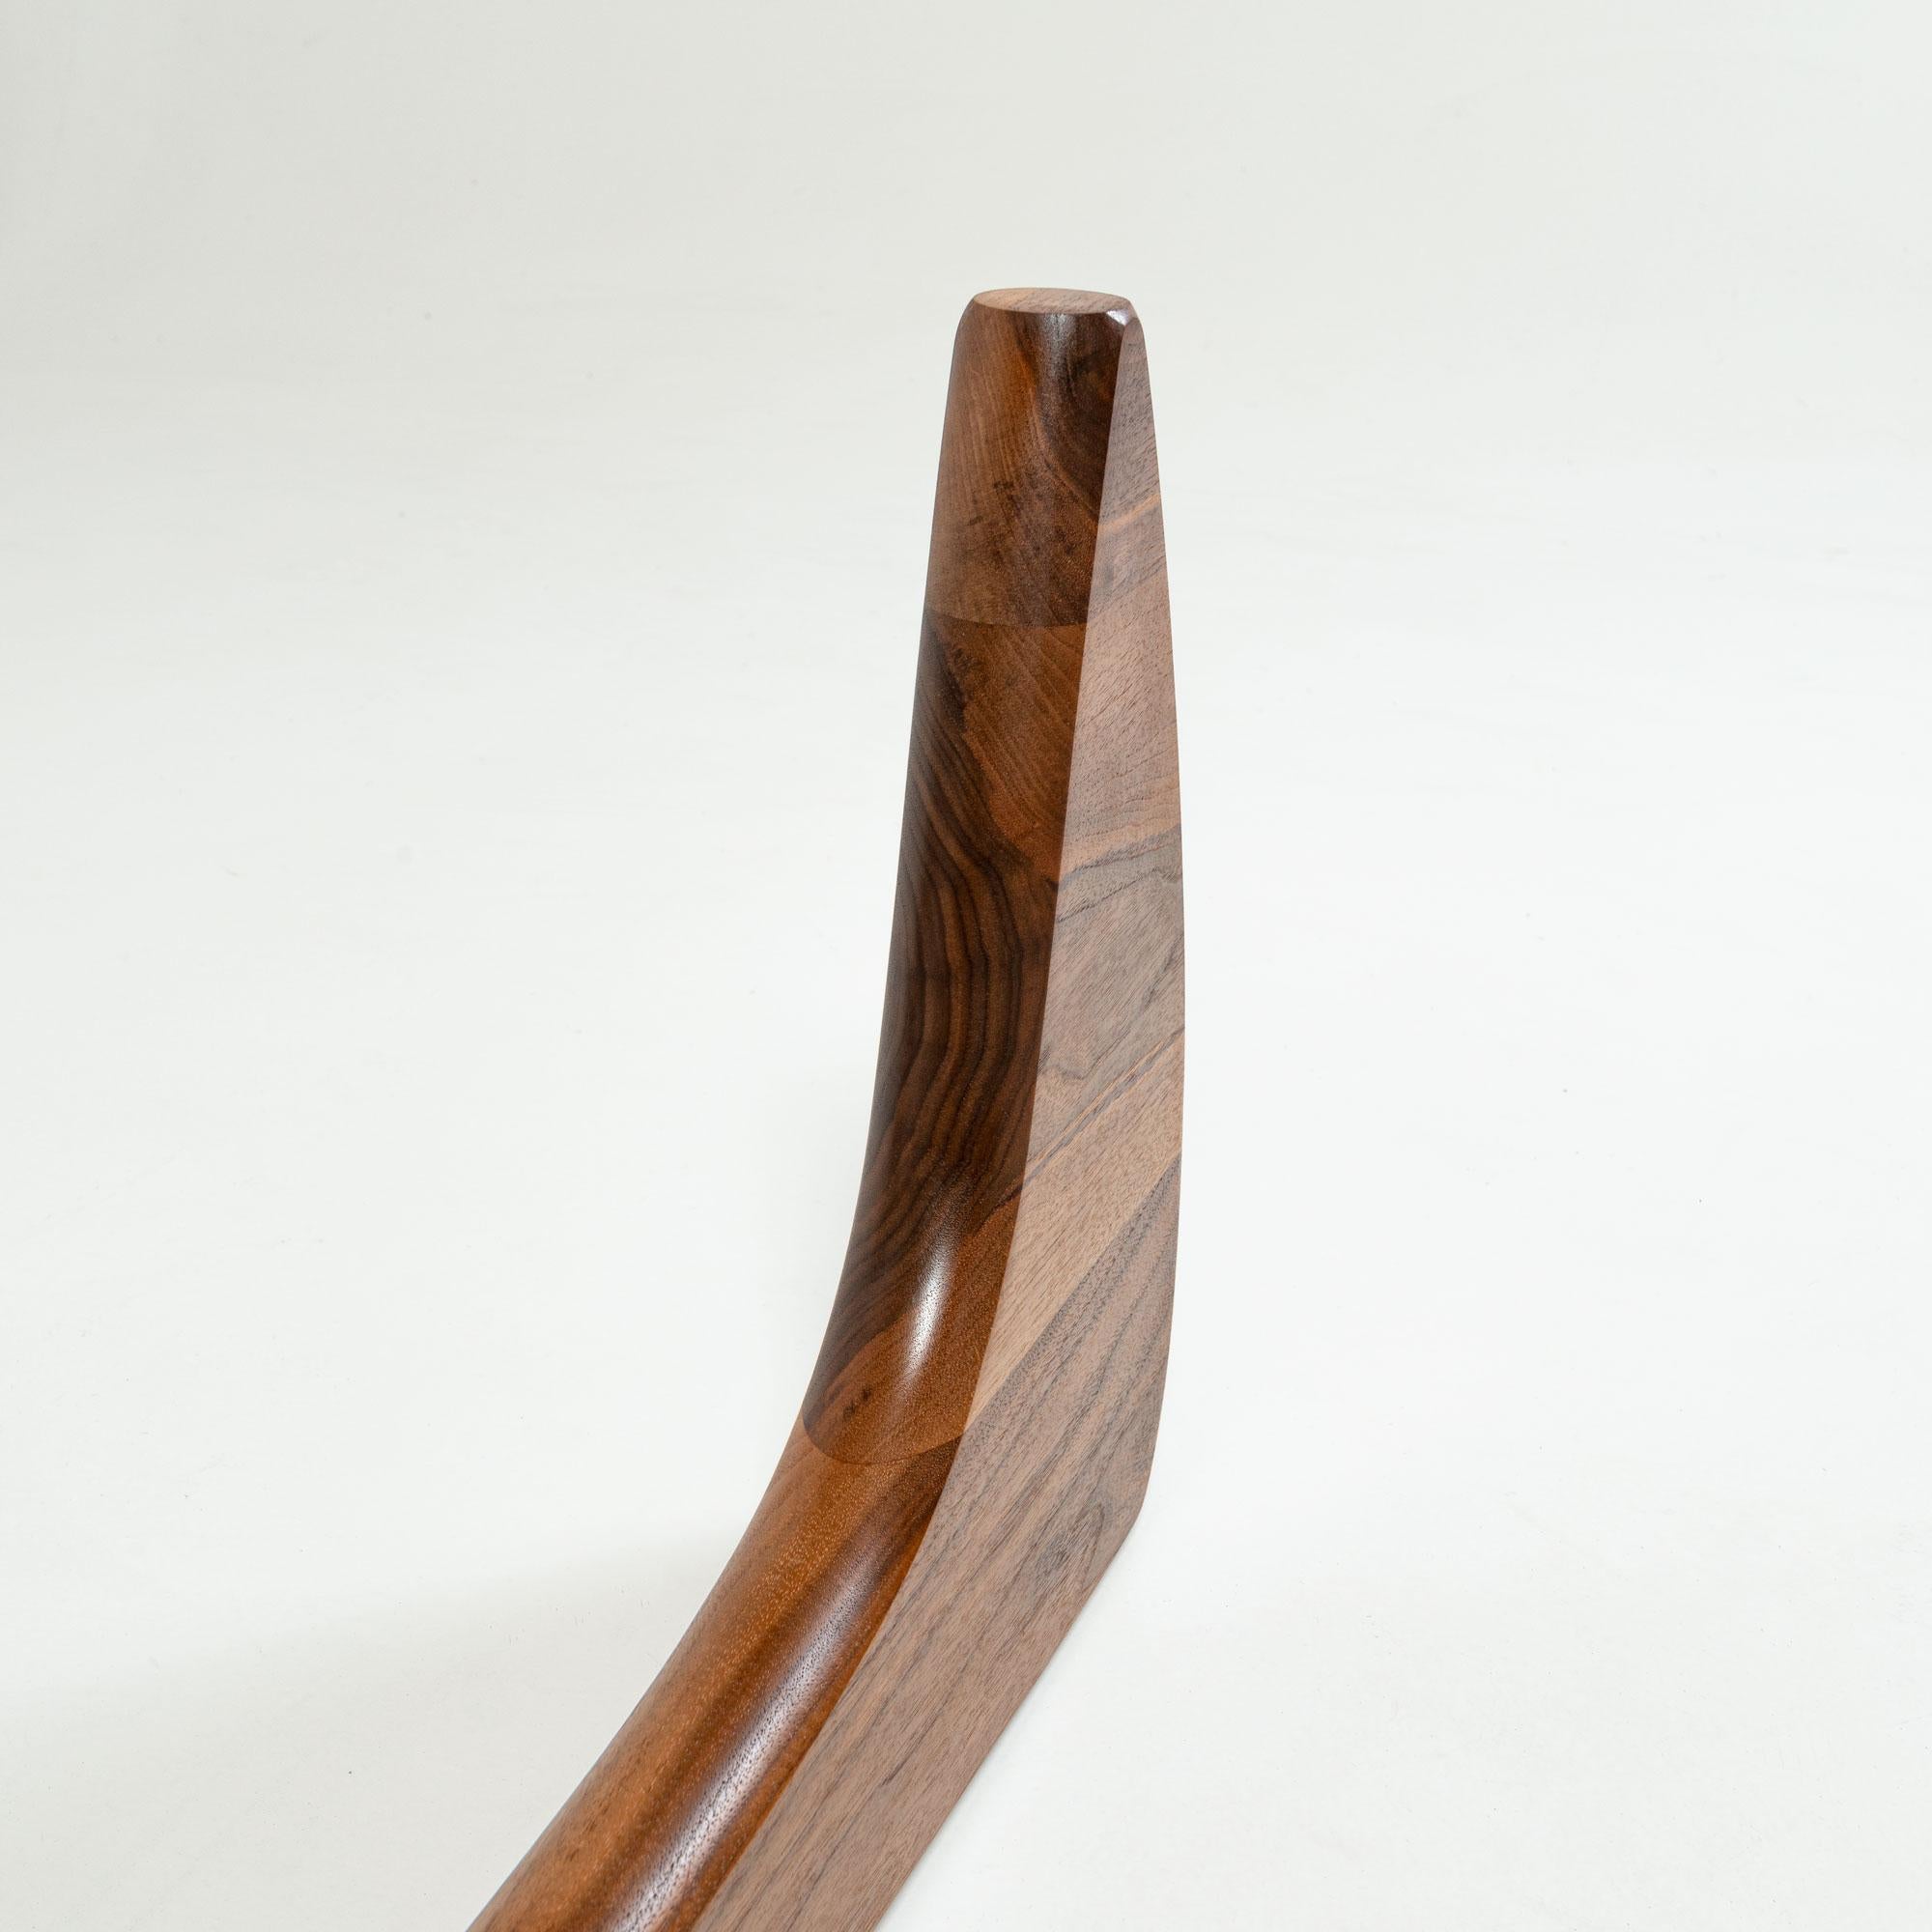 Contemporary Noguchi Table by Isamu Noguchi for Herman Miller in Walnut